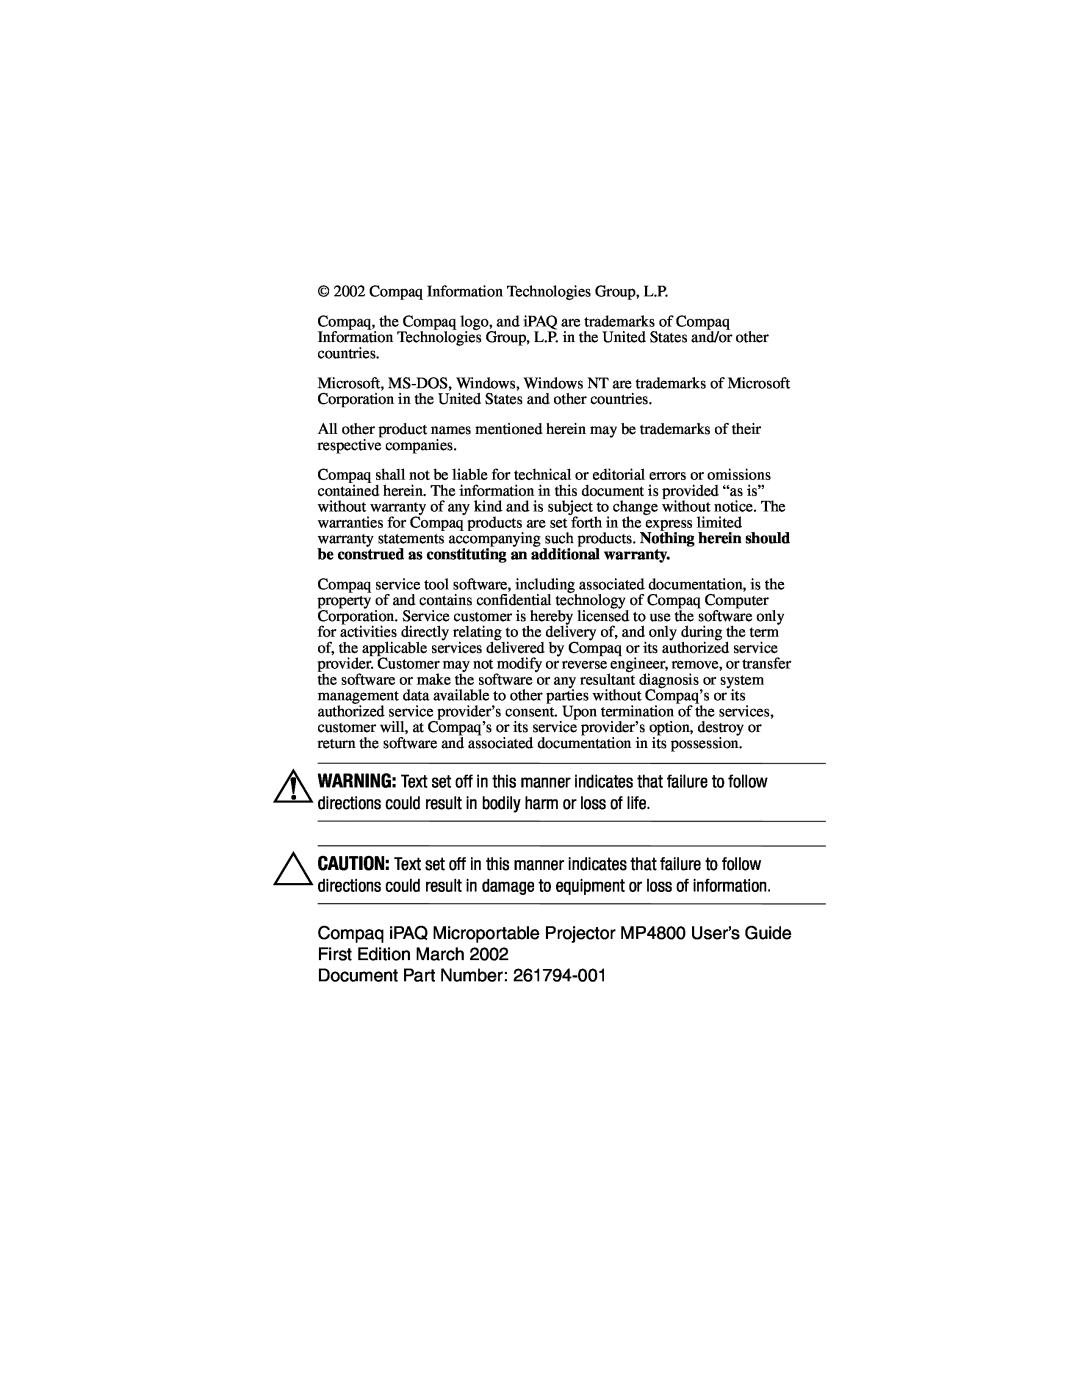 Compaq MP4800 manual Document Part Number 